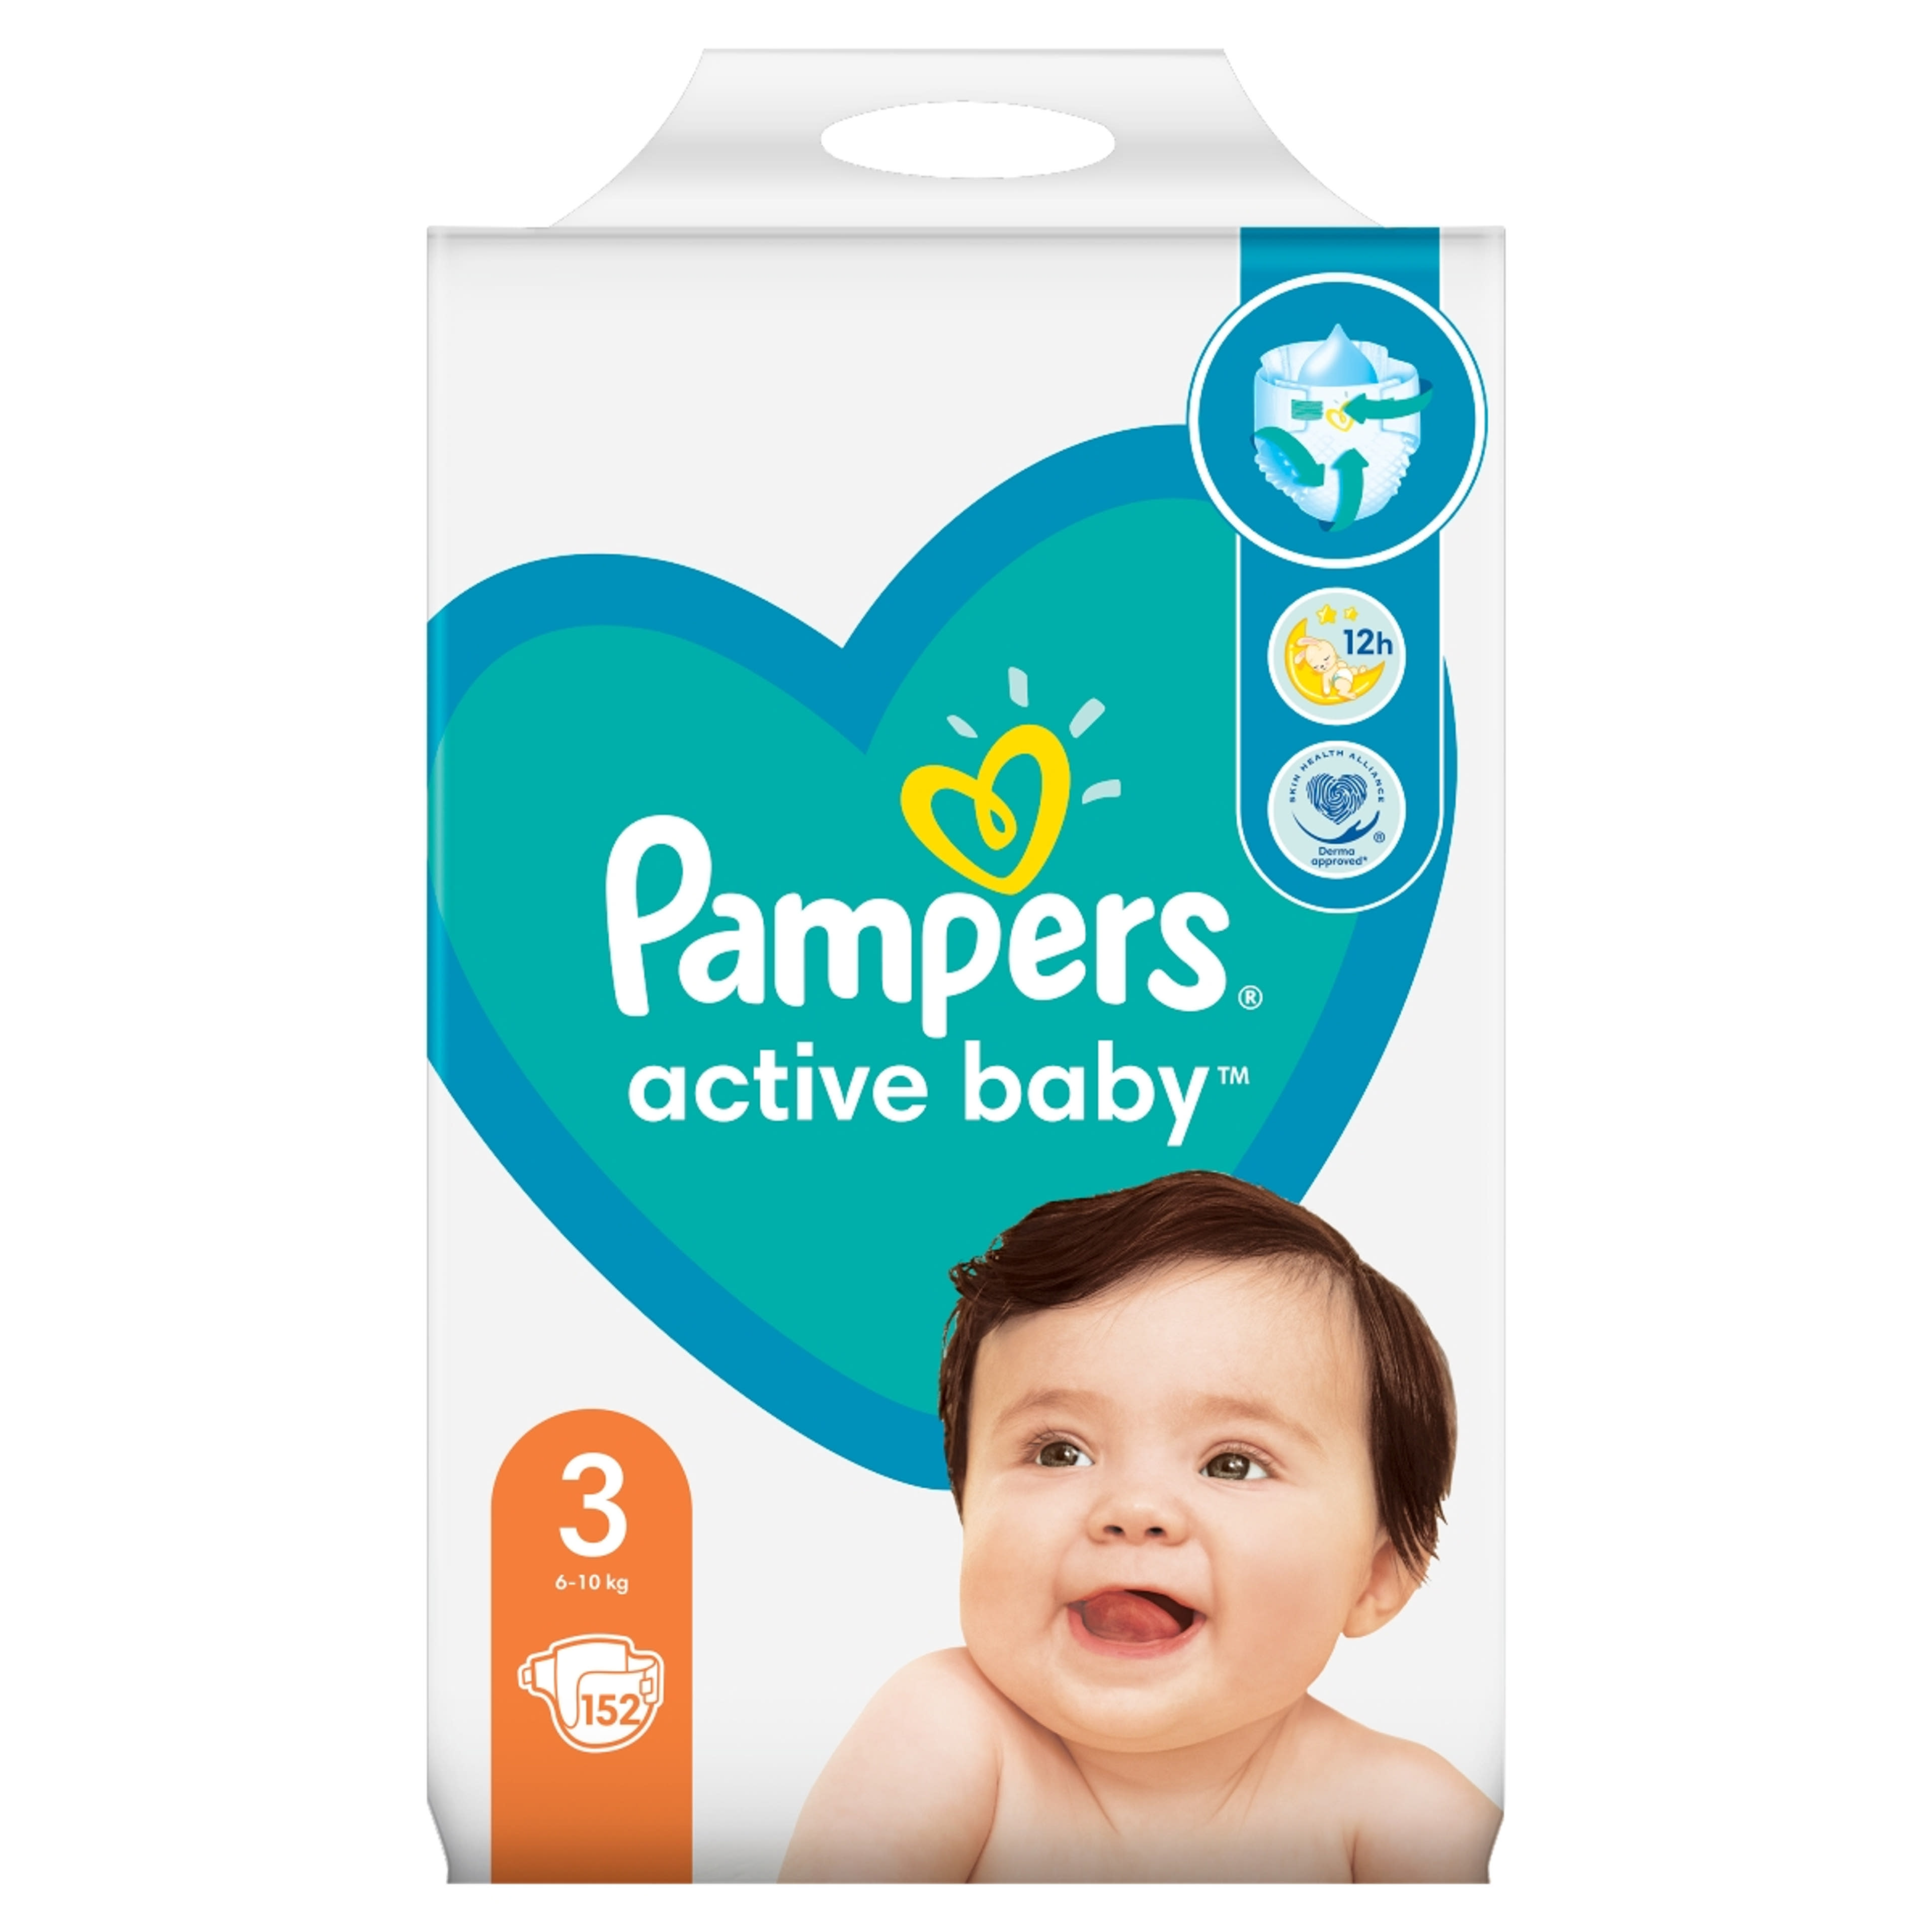 Pampers active baby mega pack+ 3-as 6-10kg - 152 db-1